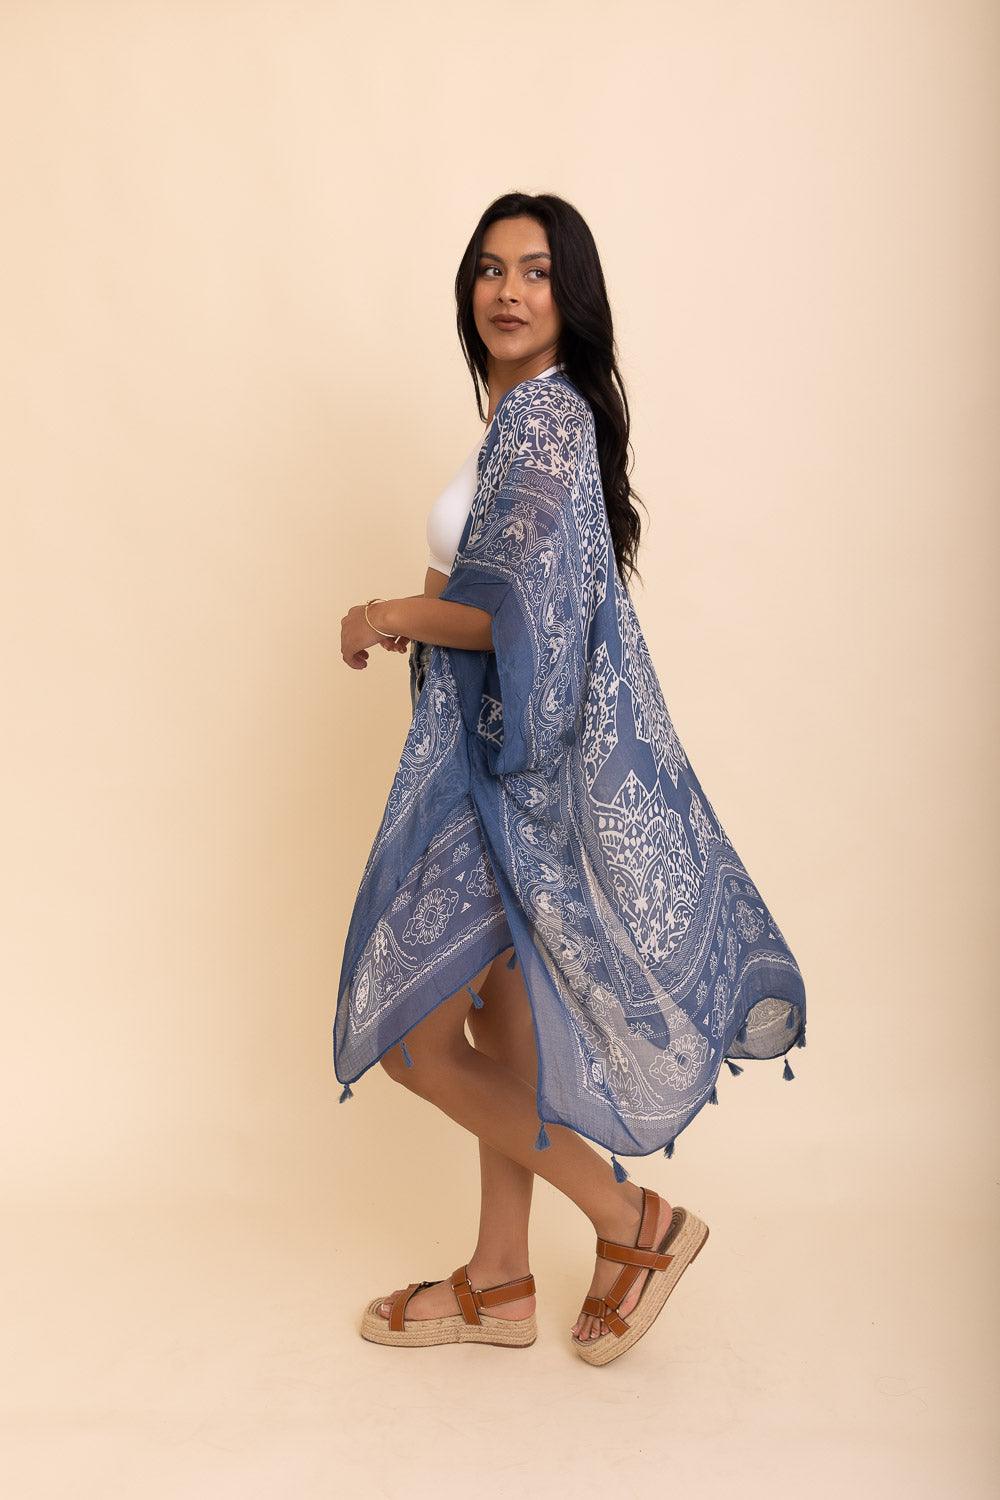 Mandala Tassel Kimono - Brand My Case